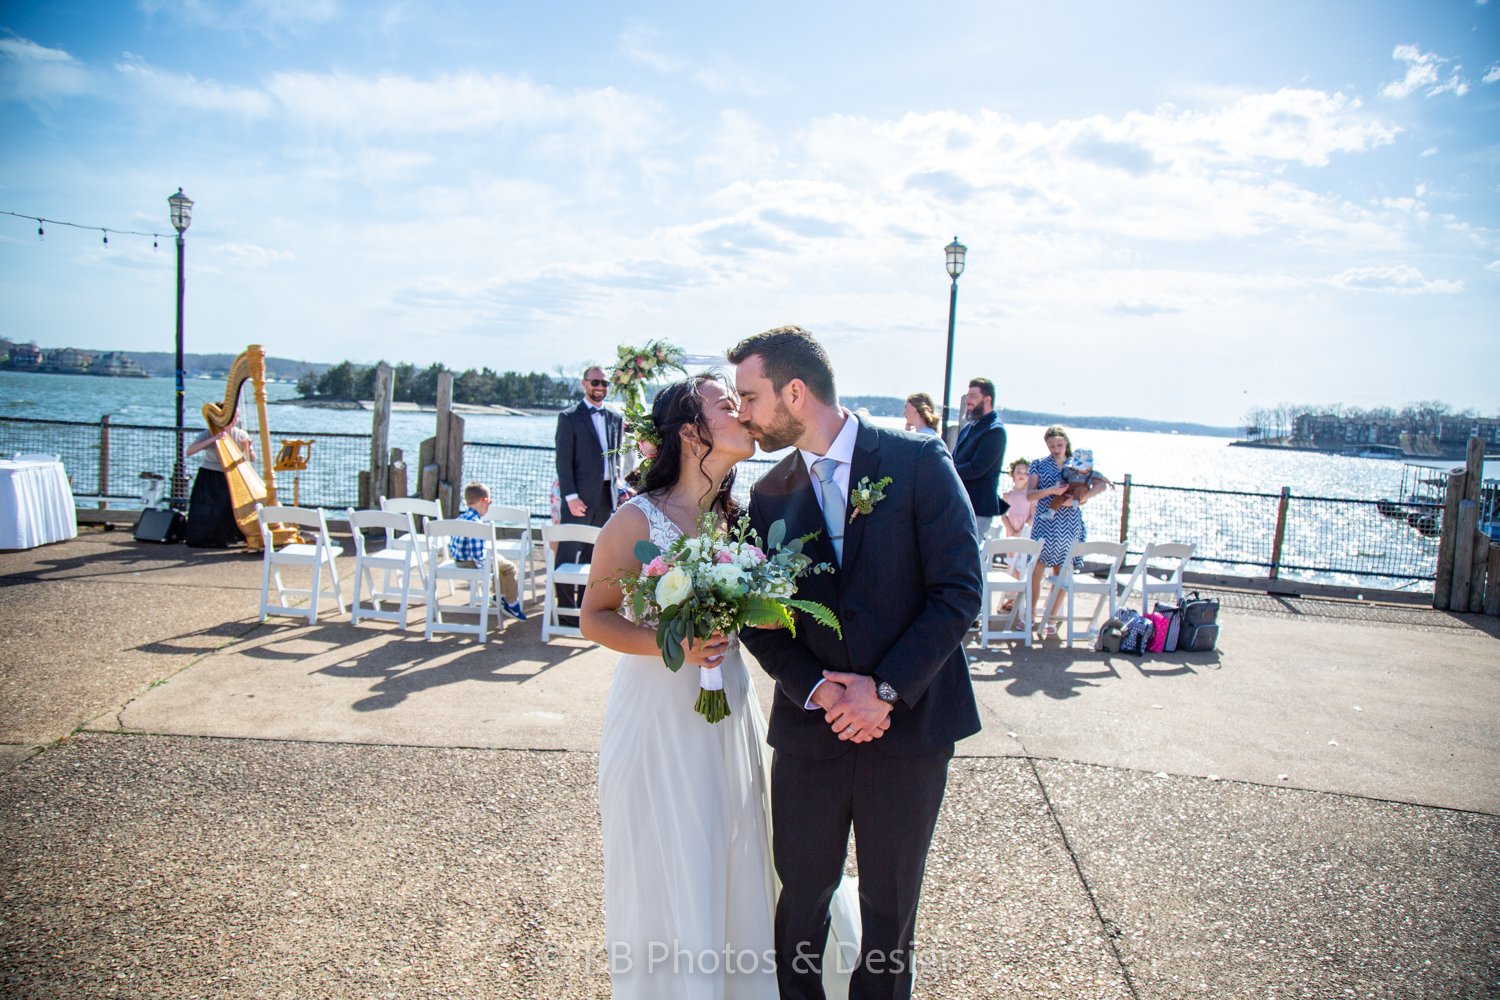 Wedding-Destination-Photography-Lake-of-the-Ozarks-Missouri-Wade-Natsuko-Jefferson-City-bride-groom-Lodge-of-Four-Seasons-wedding-photographer-KB-Photos-and-Design-139.jpg